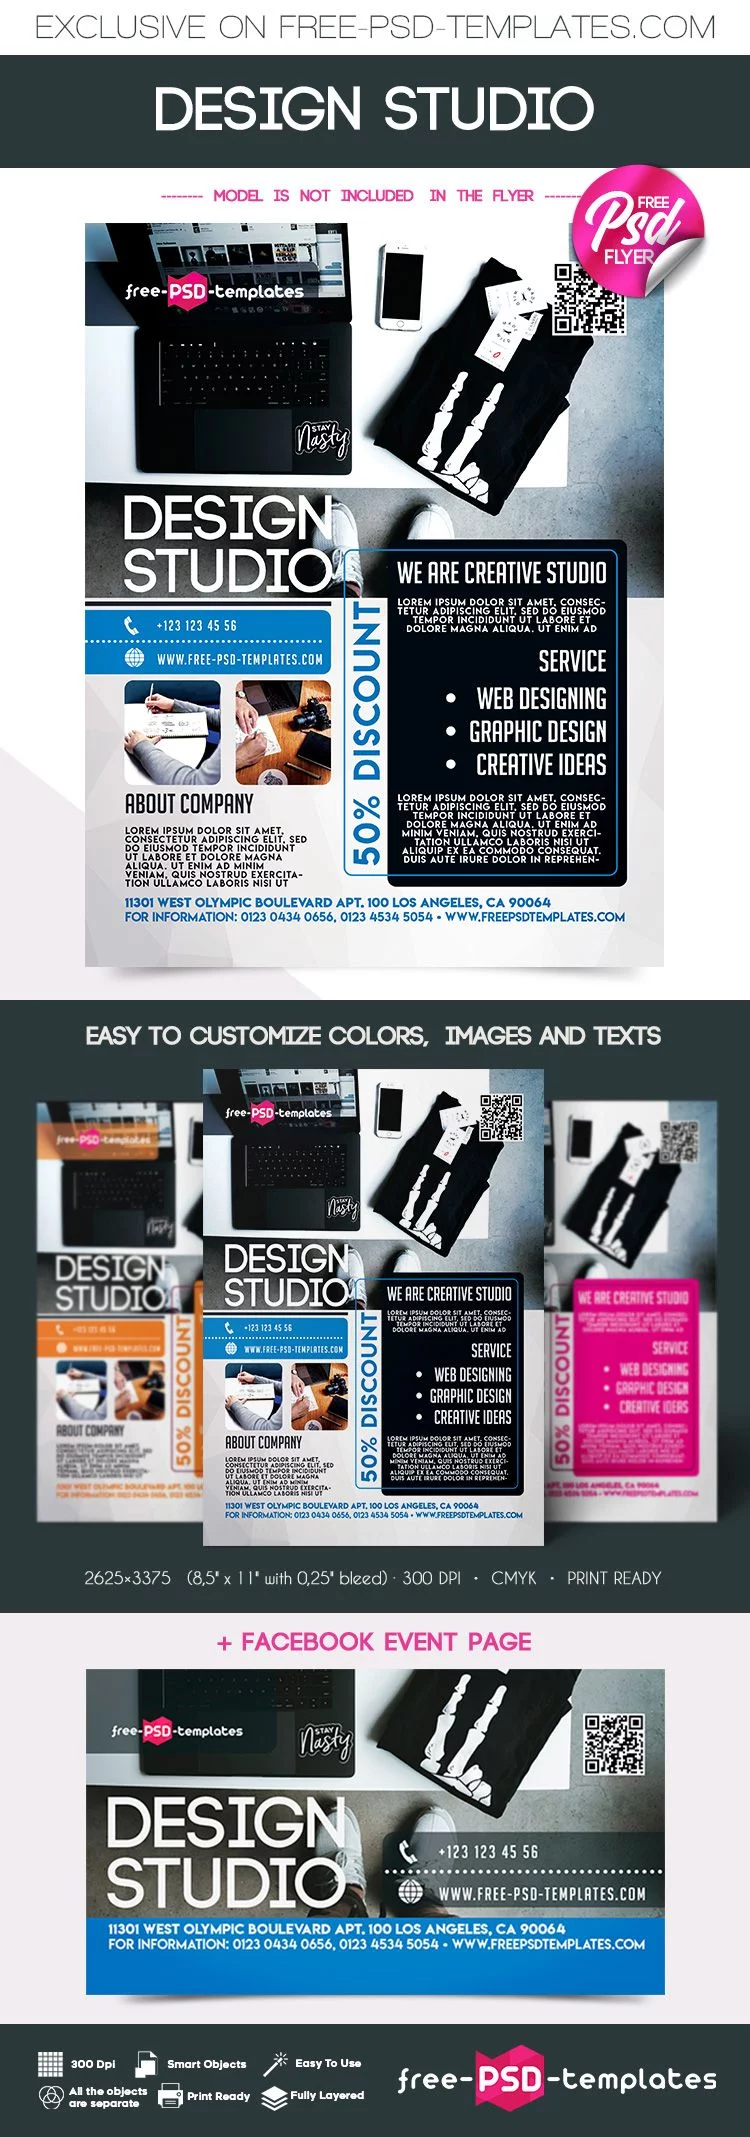 Free Design Studio Flyer in PSD